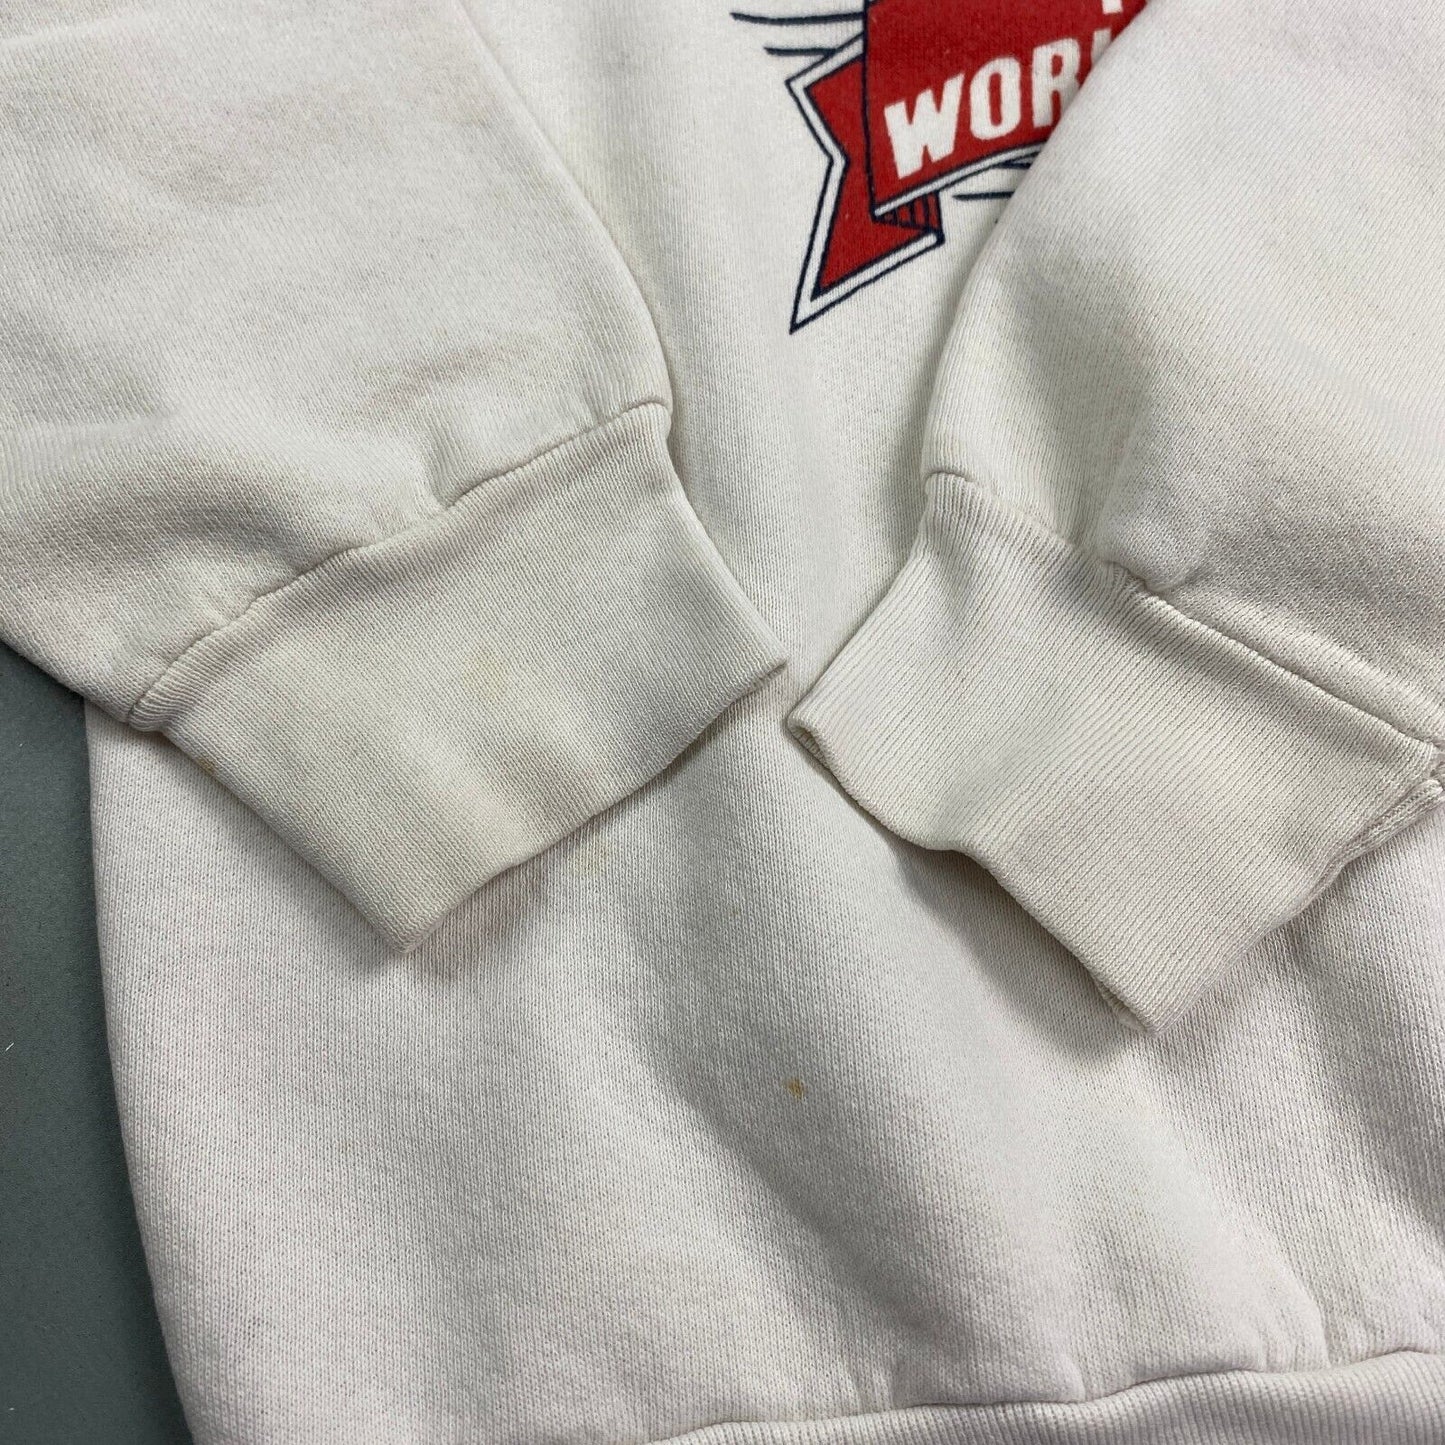 VINTAGE 80s Minnesota Twins World Champs Crewneck Sweater sz Medium Men Adult